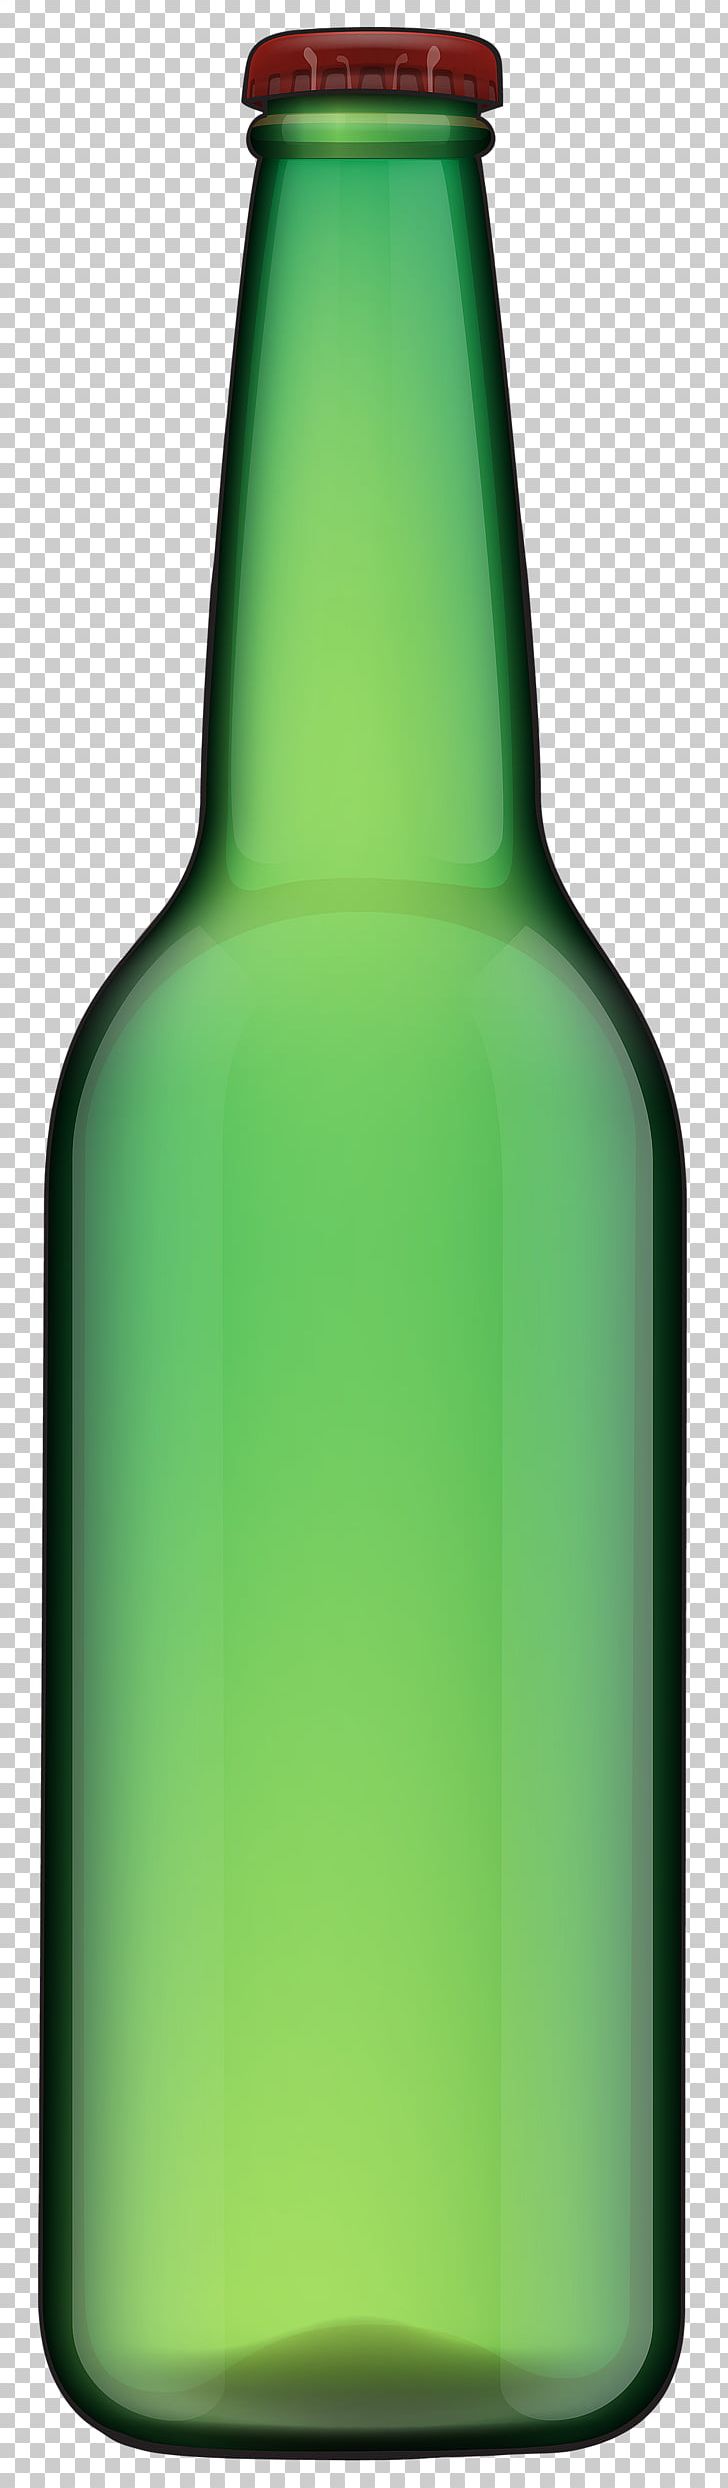 Beer Bottle Wine PNG, Clipart, Beer, Beer Bottle, Bottle, Bottle Cap, Computer Icons Free PNG Download